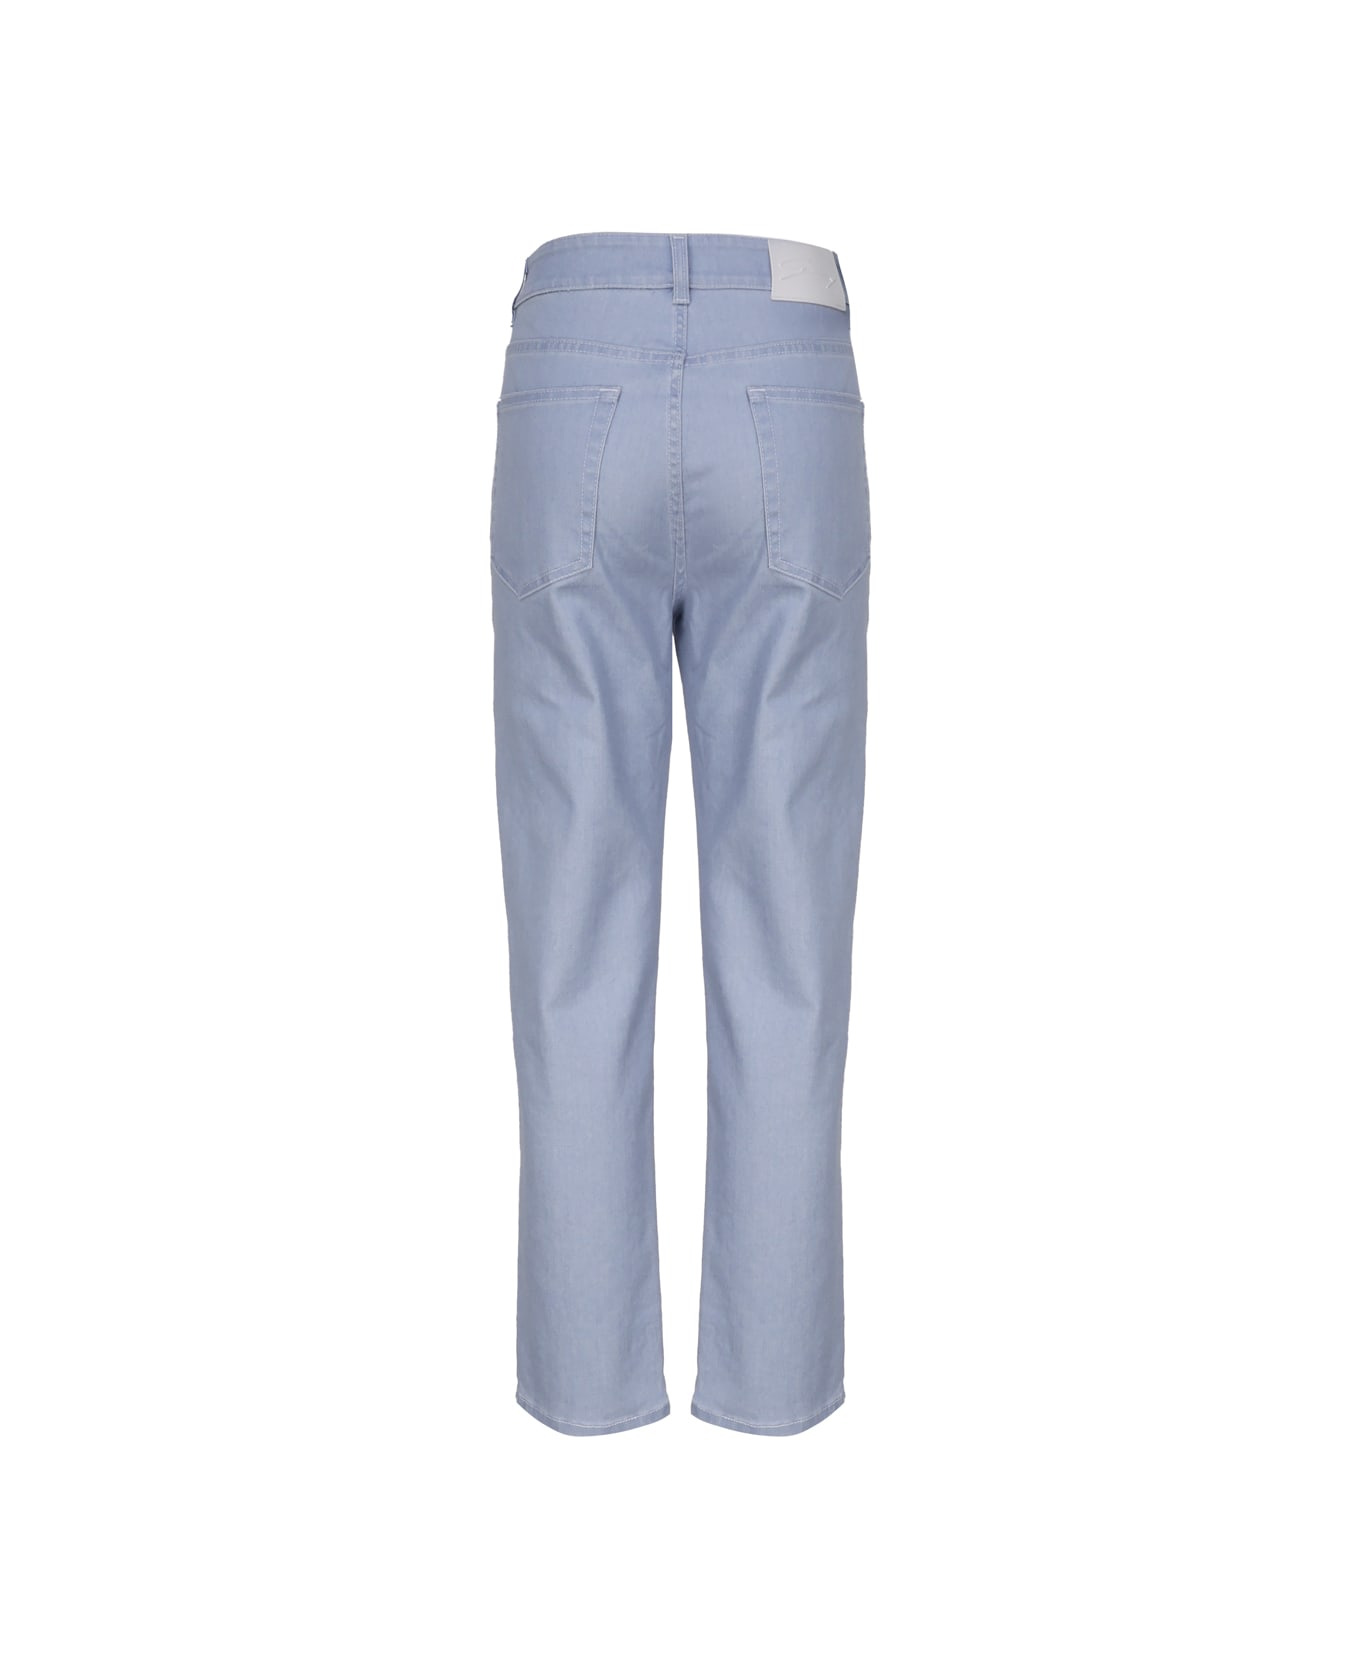 Genny Straight Cut Jeans - Light blue